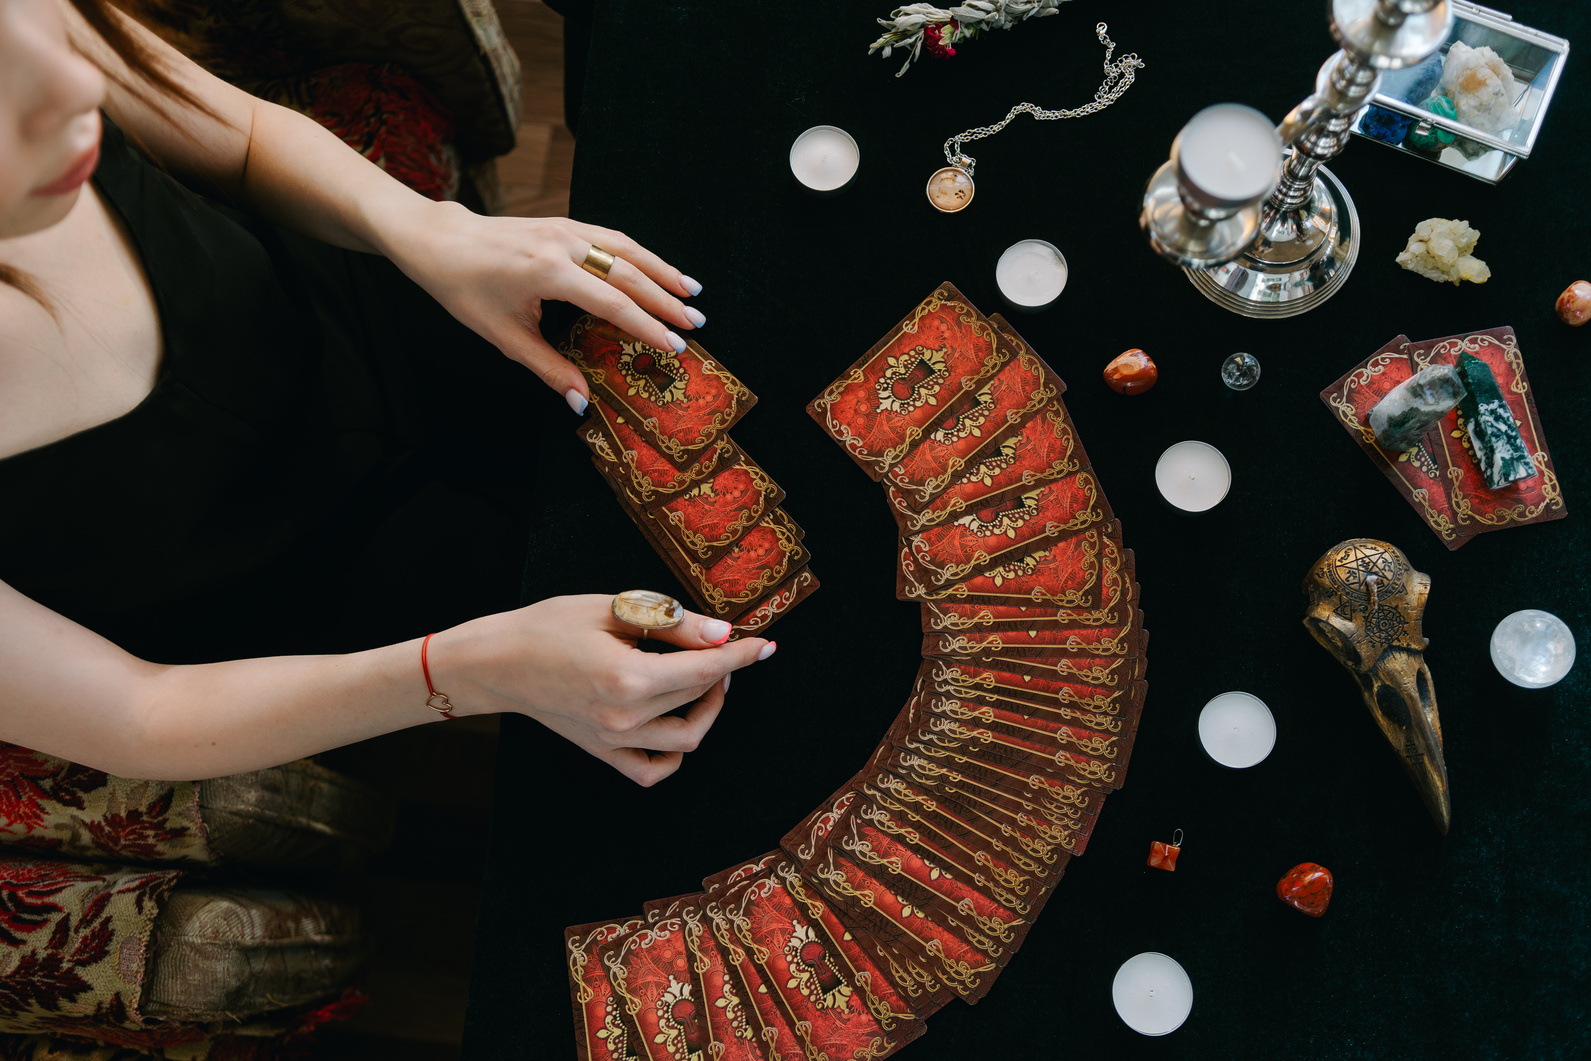 A Woman Spreading the Tarot Card on the Table